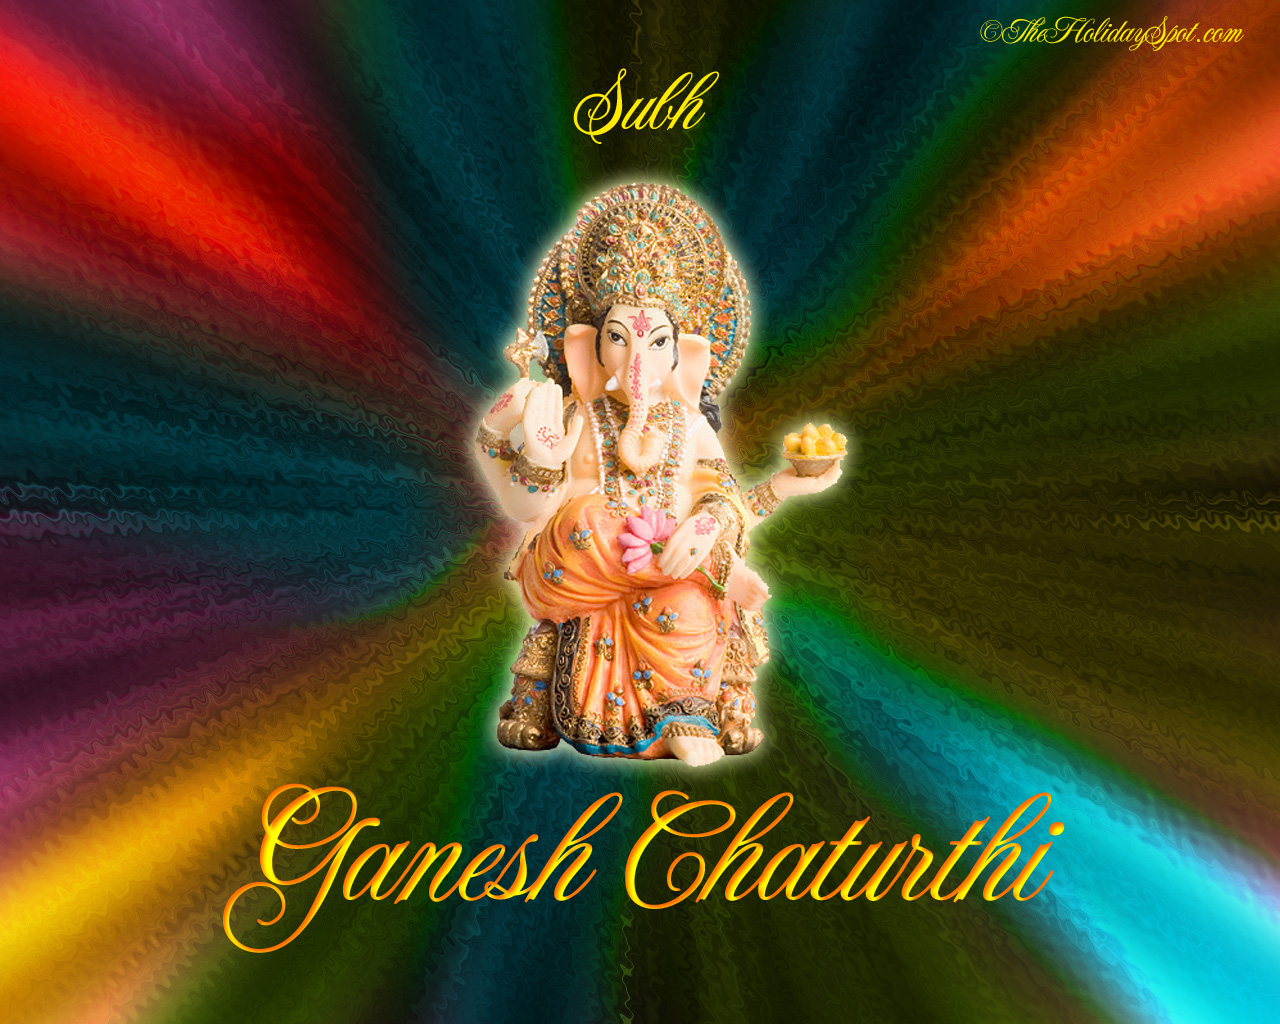 Ganesh Chaturthi Live - 1280x1024 Wallpaper 